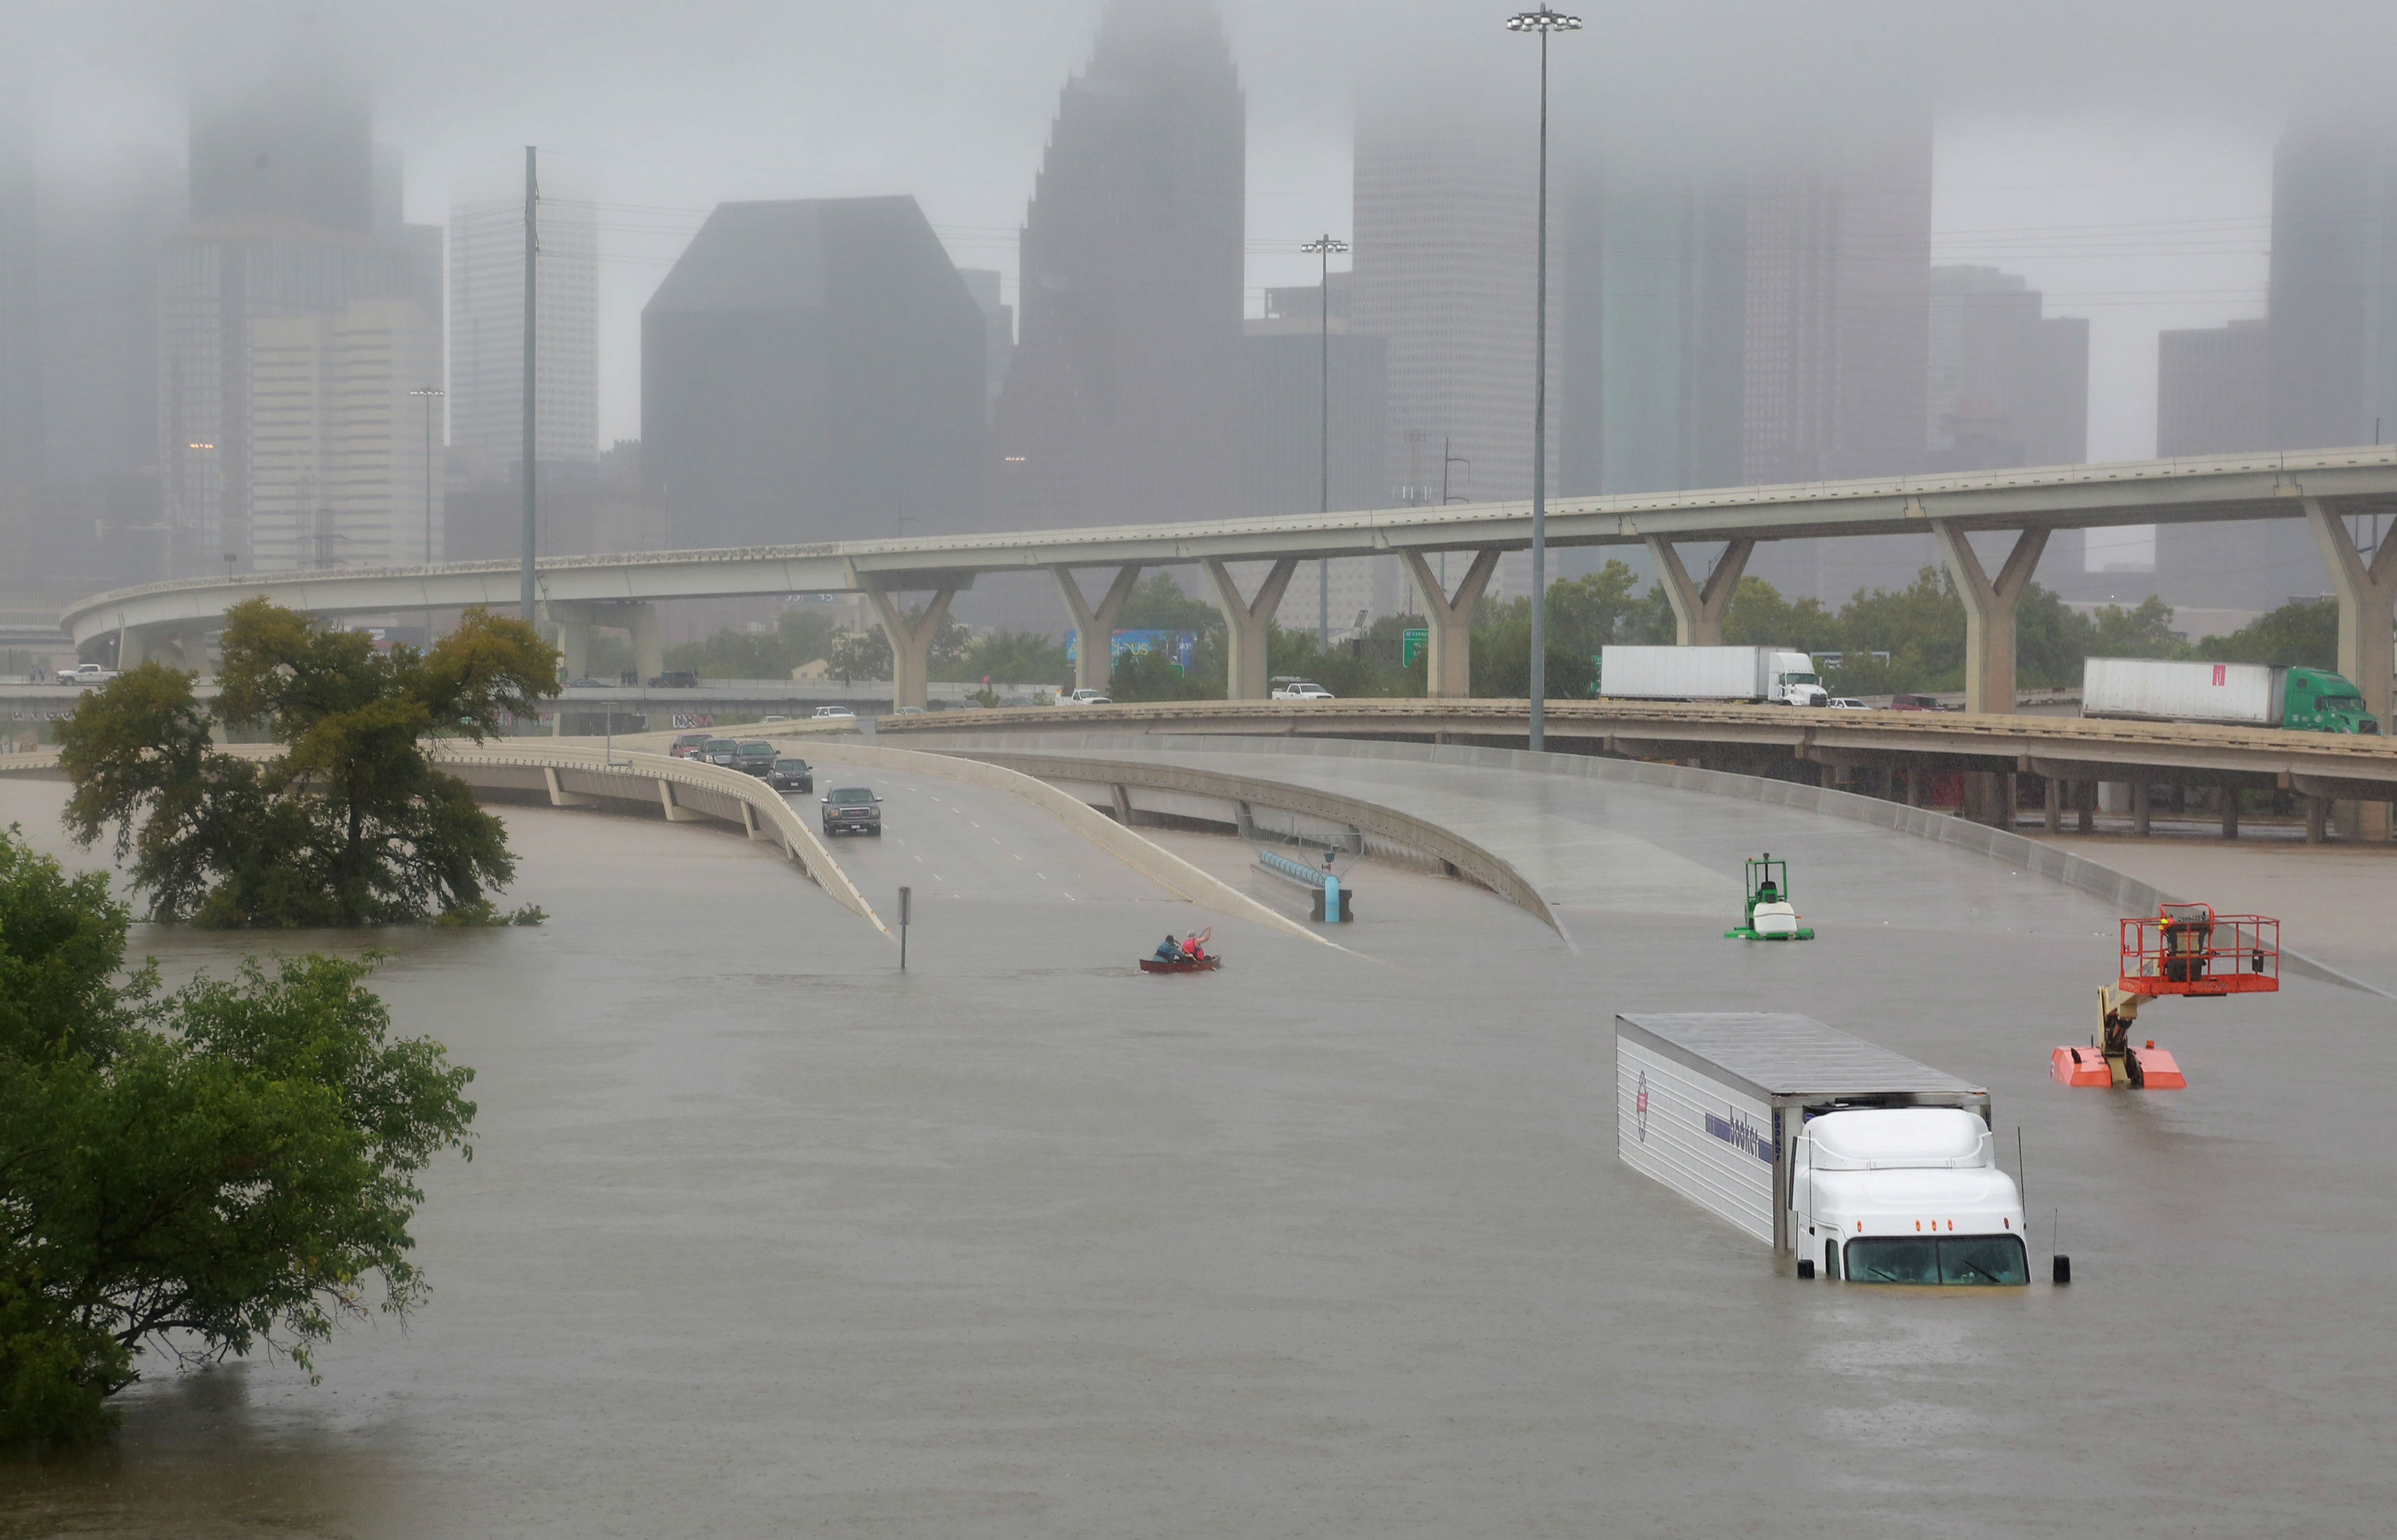 Texas parishioners shocked by devastation caused by Hurricane Harvey